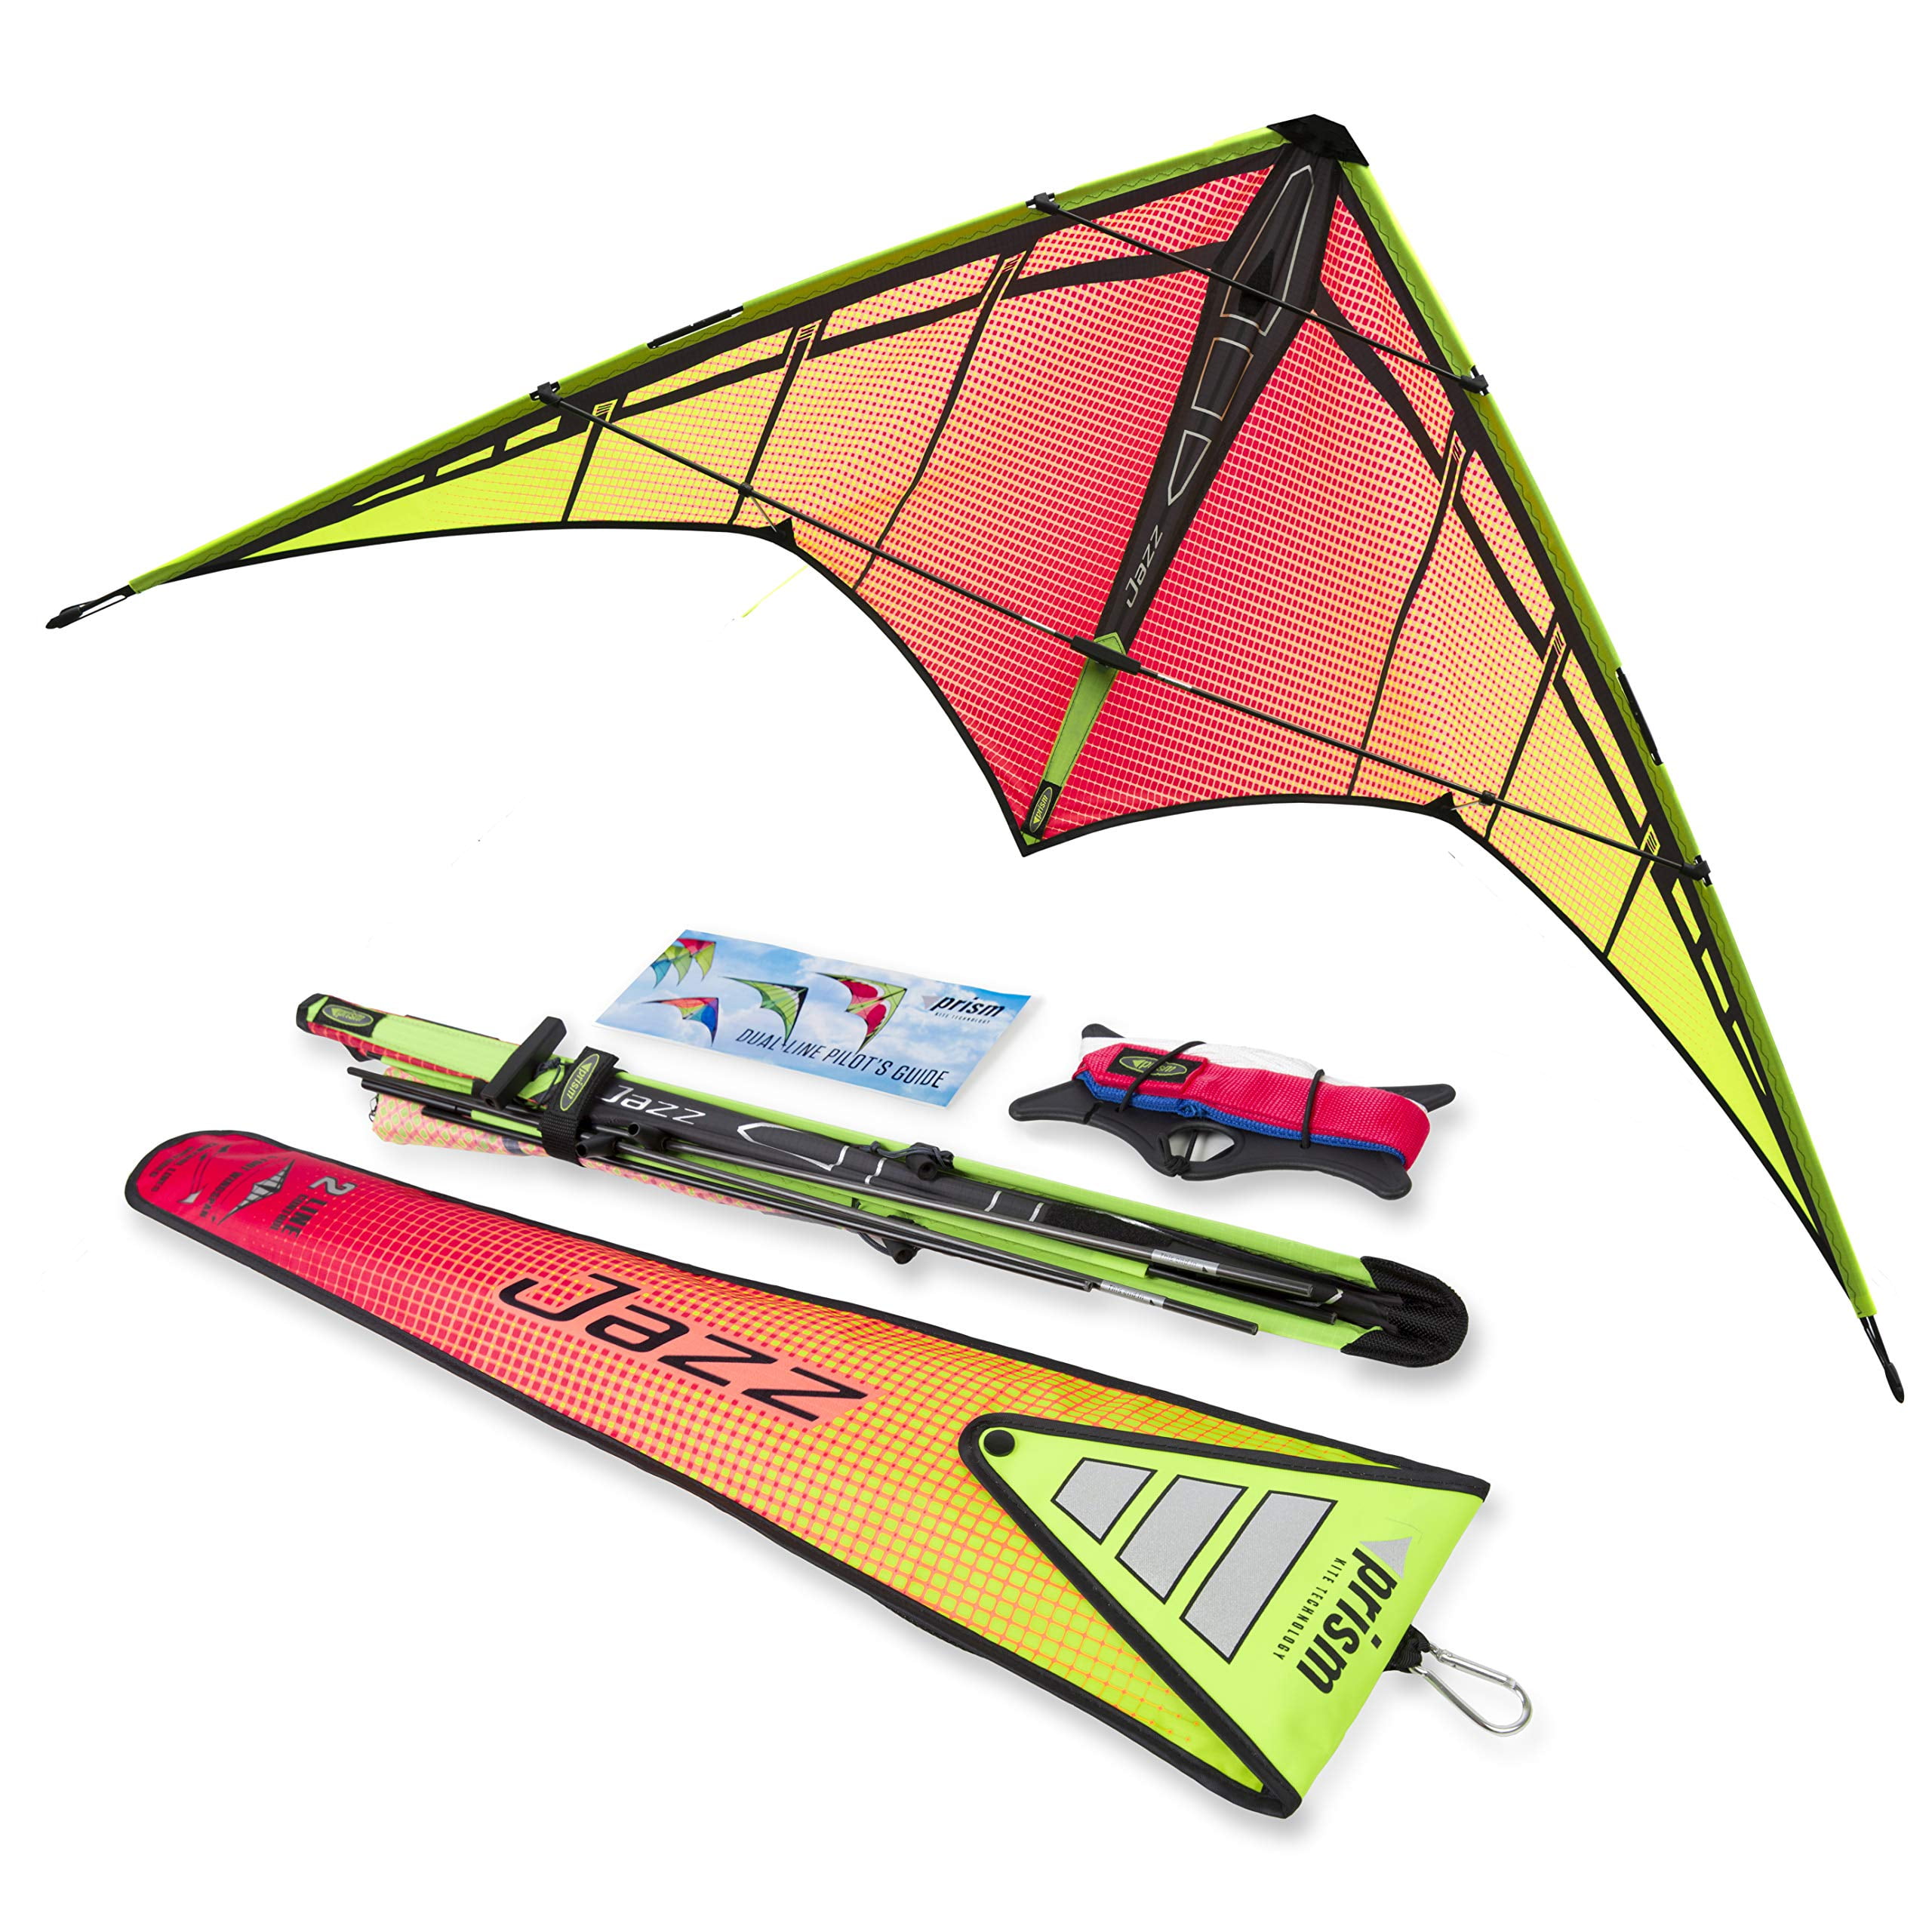 Carry Bag RipStop Nylon Stunt Kite EZ SPORT 70 Dual Control Dacron Lines 